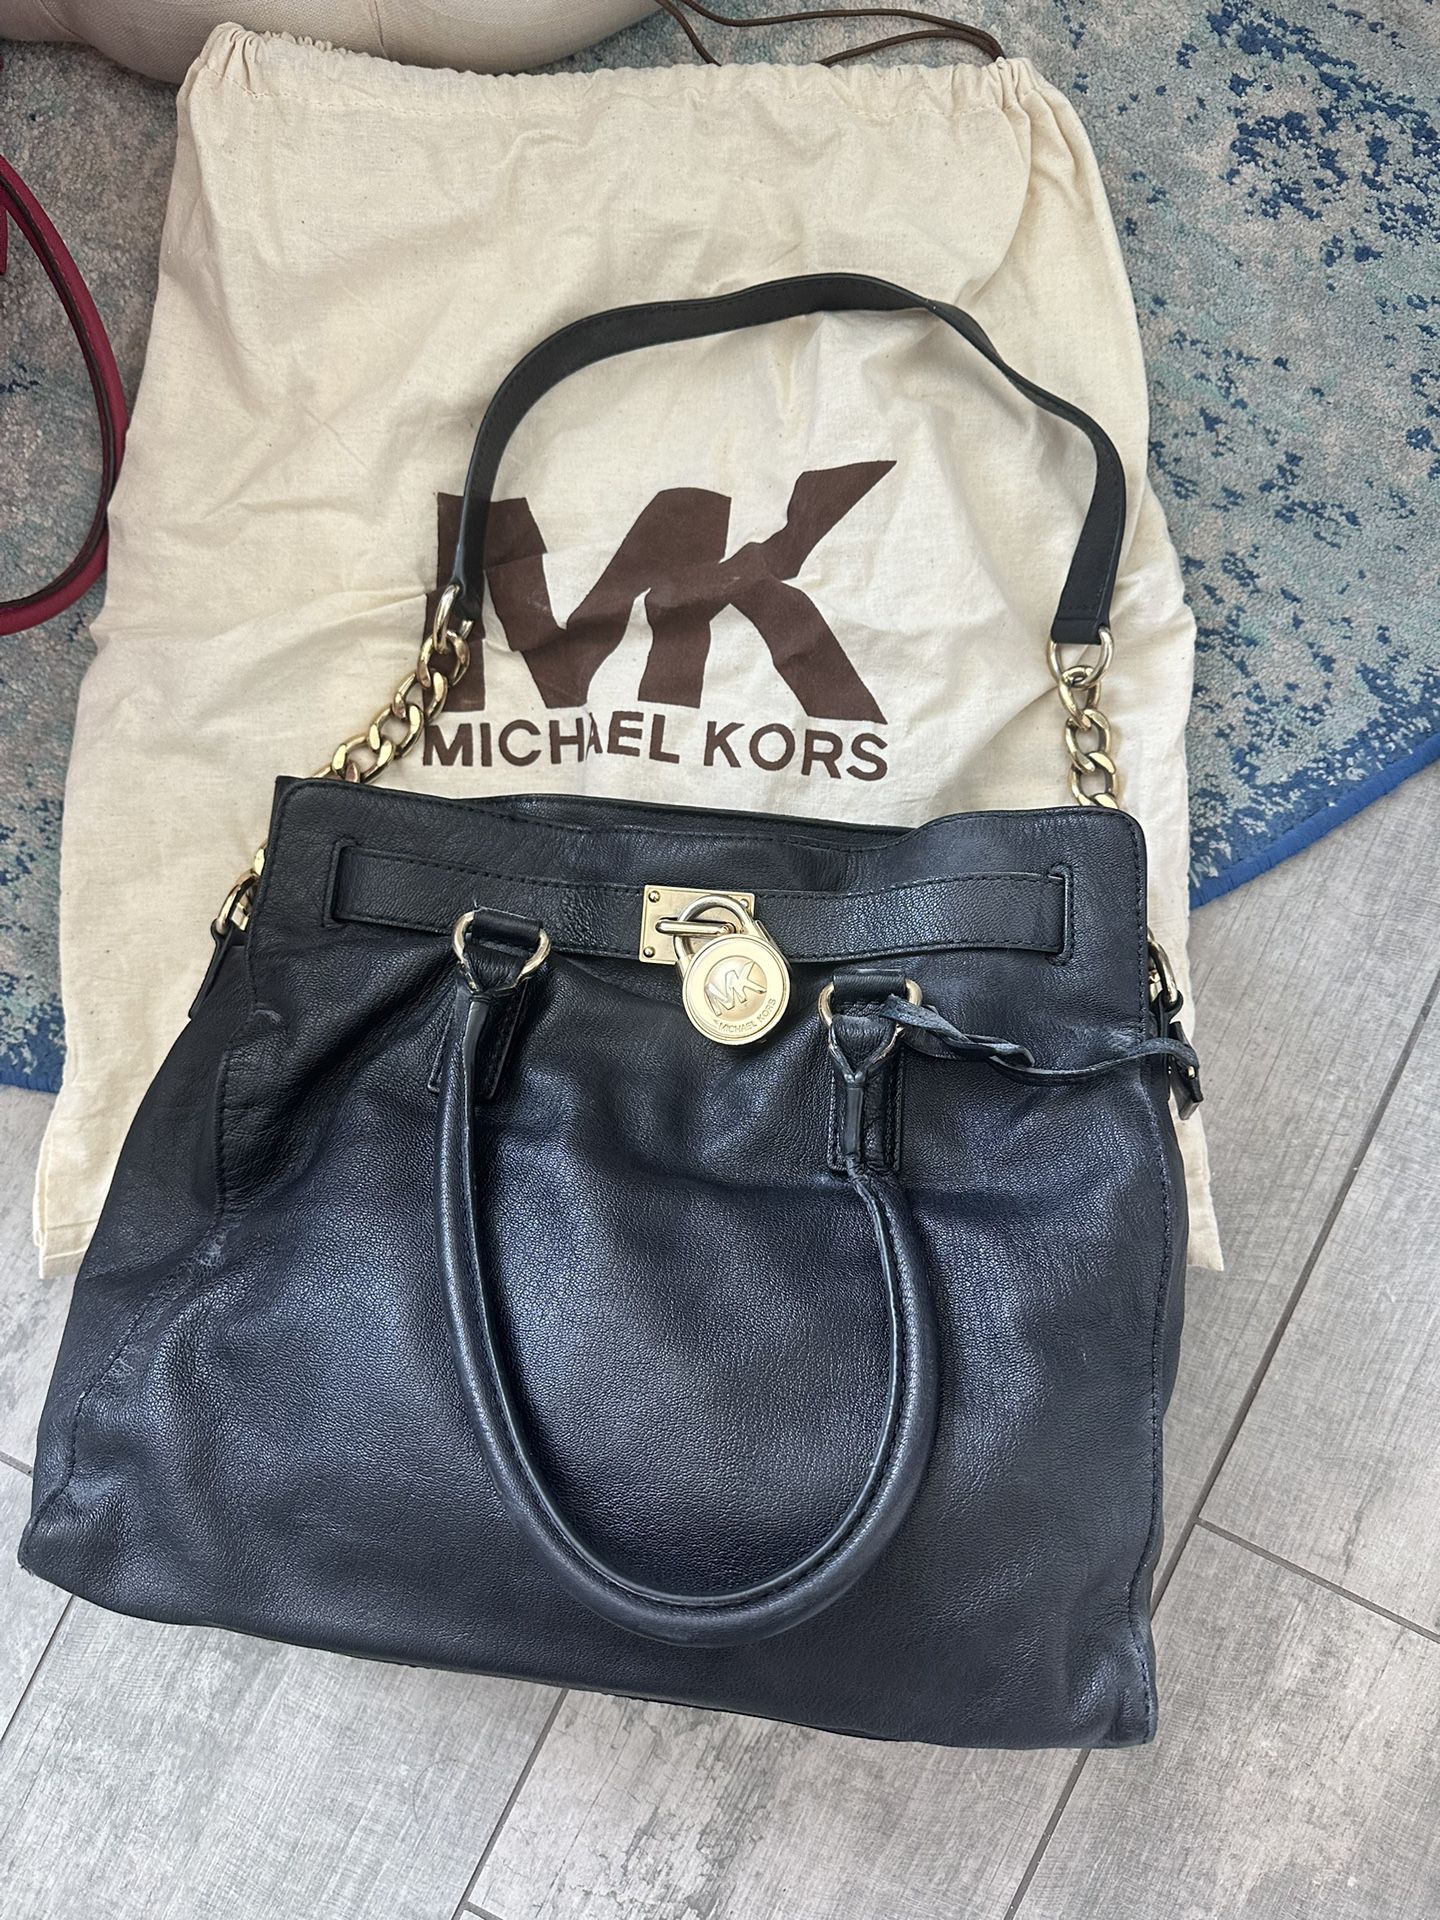 Black Leather Michael Kors Bag